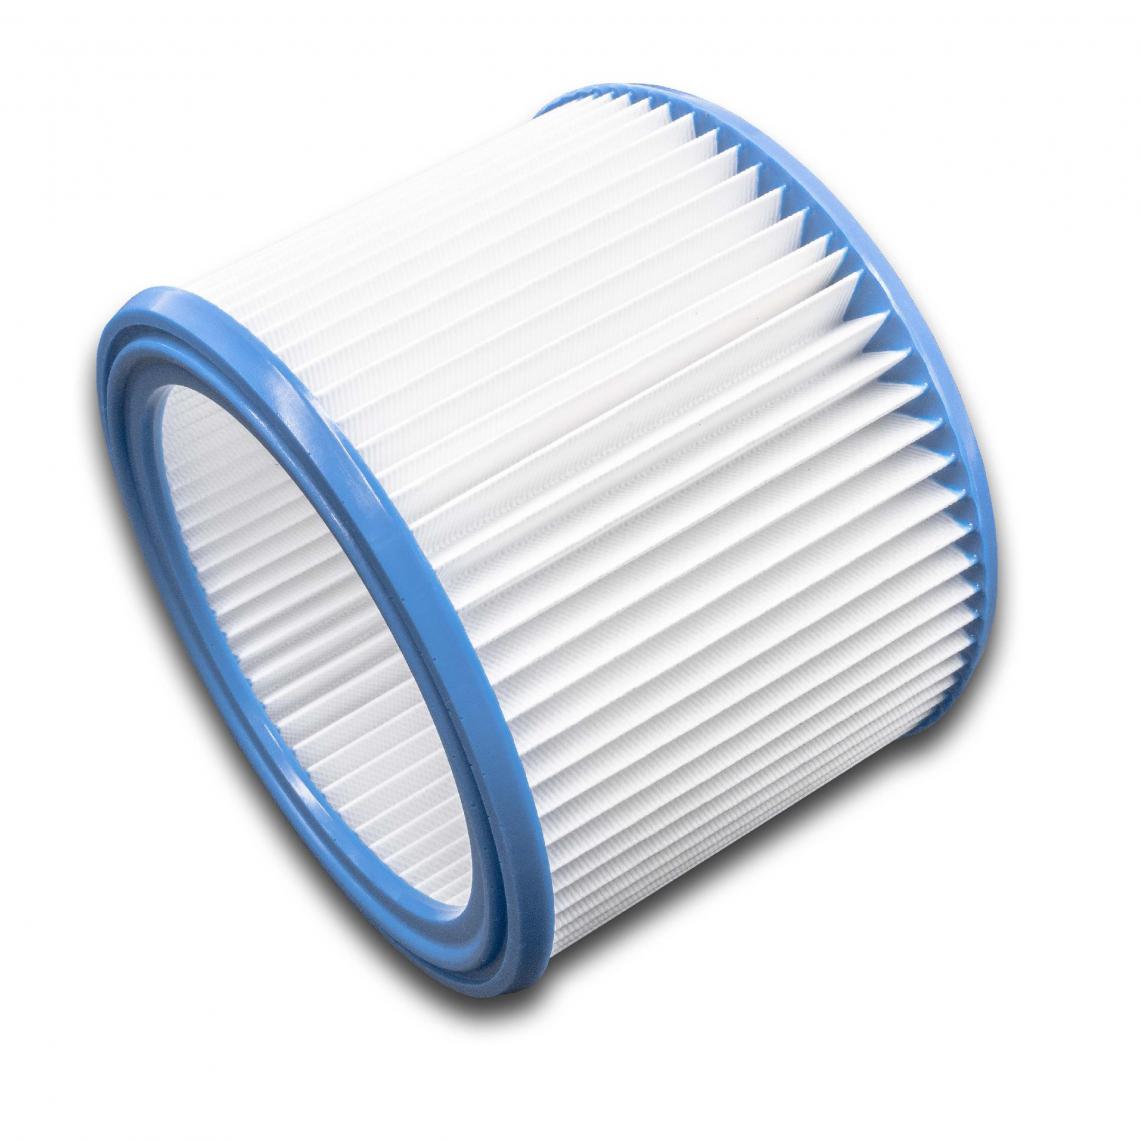 Vhbw - vhbw Set de filtres 5x Filtre plissé compatible avec JMP Inox 35 aspirateur à sec ou humide - Filtre à cartouche - Accessoire entretien des sols